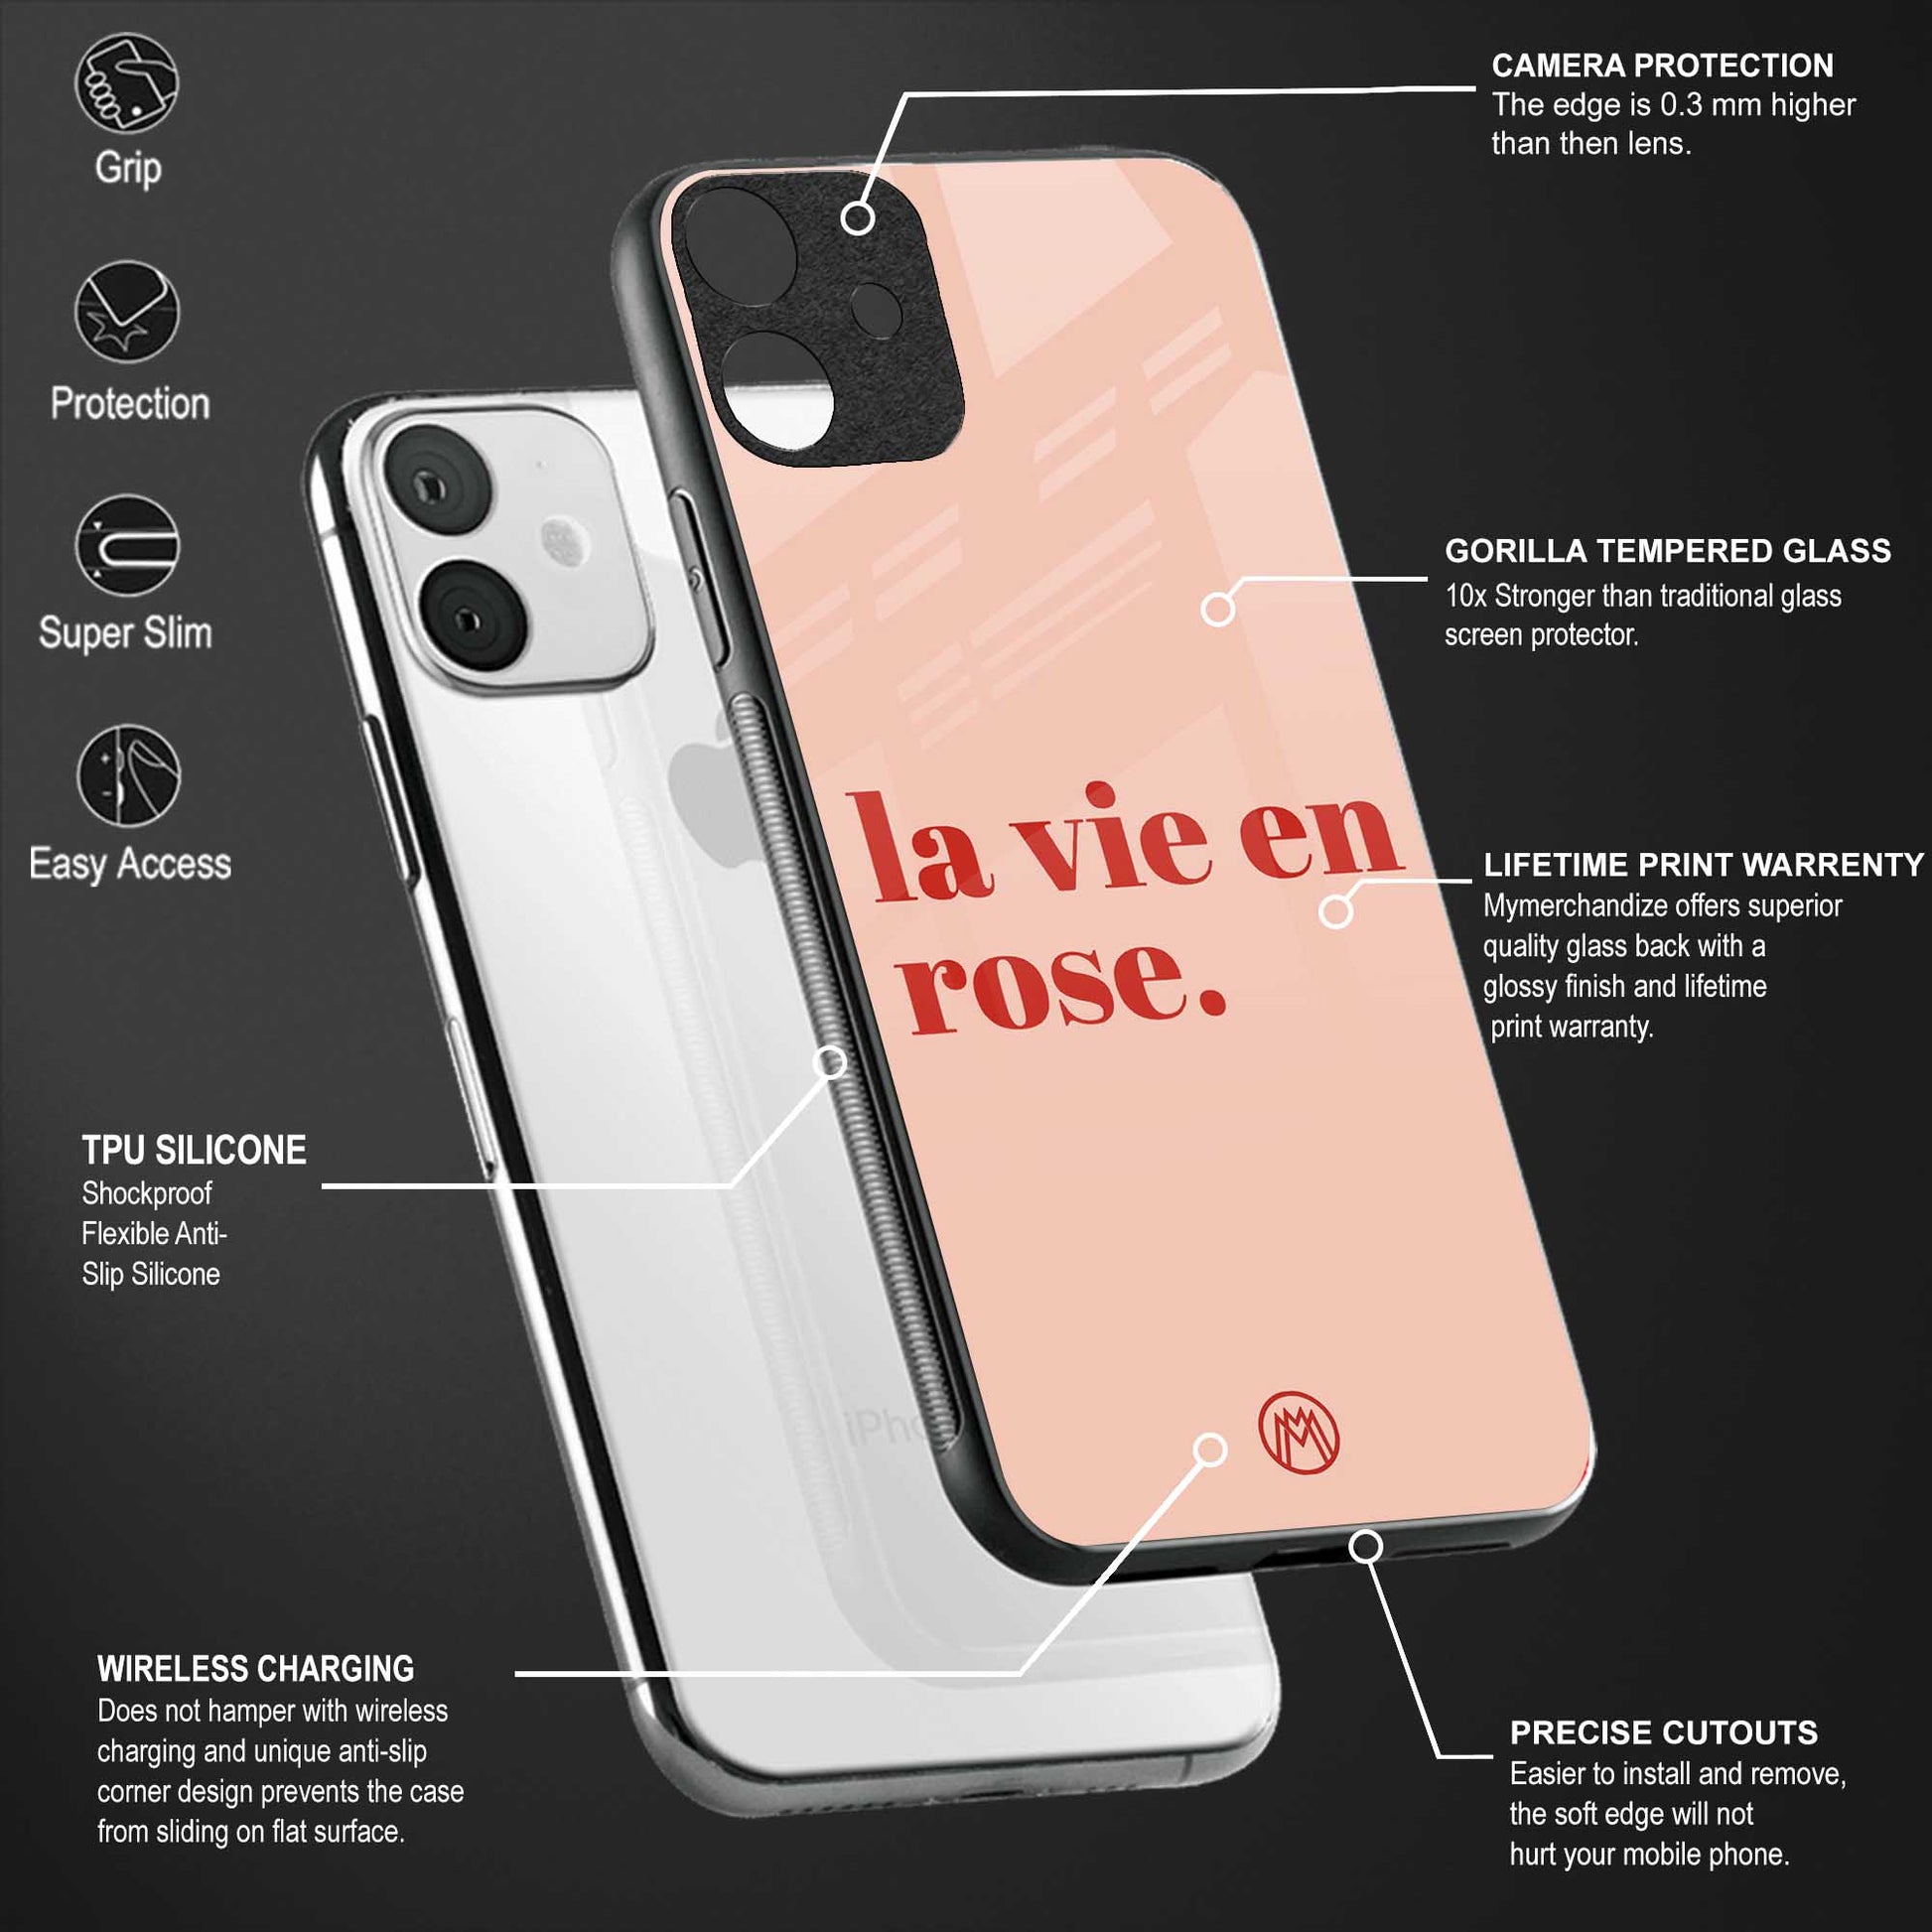 la vie en rose quote glass case for iphone xs max image-4